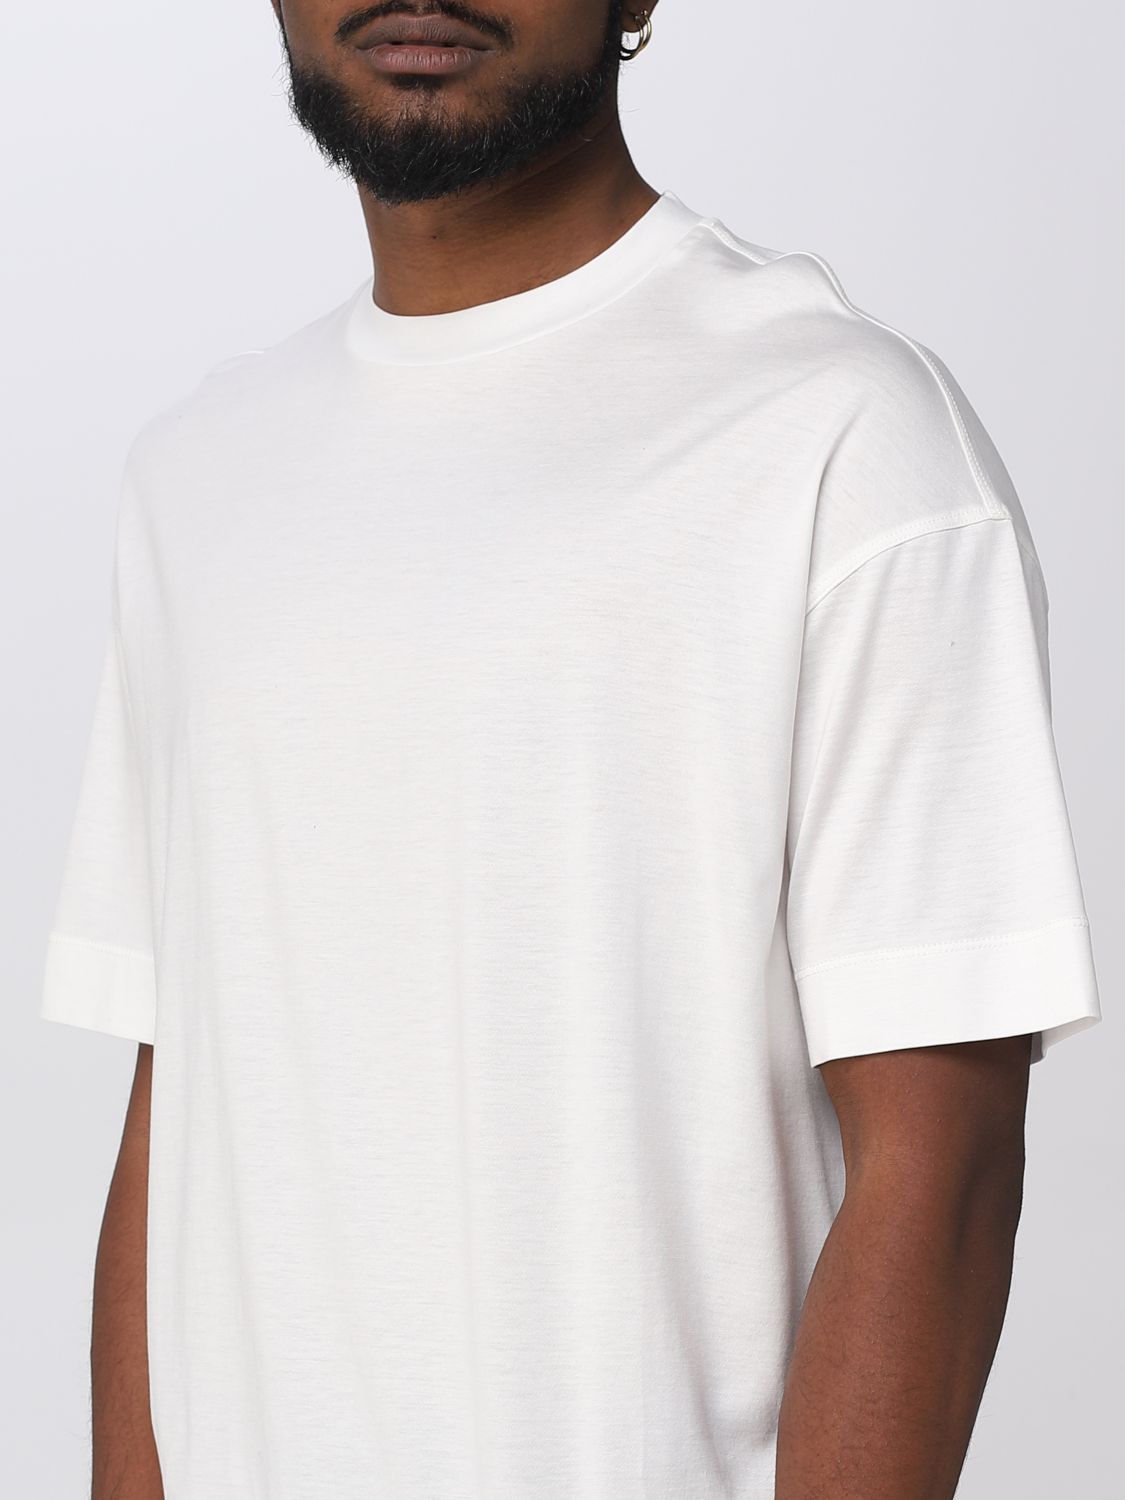 EMPORIO ARMANI: t-shirt for man - White | Emporio Armani t-shirt  3R1TV61JUVZ online on 